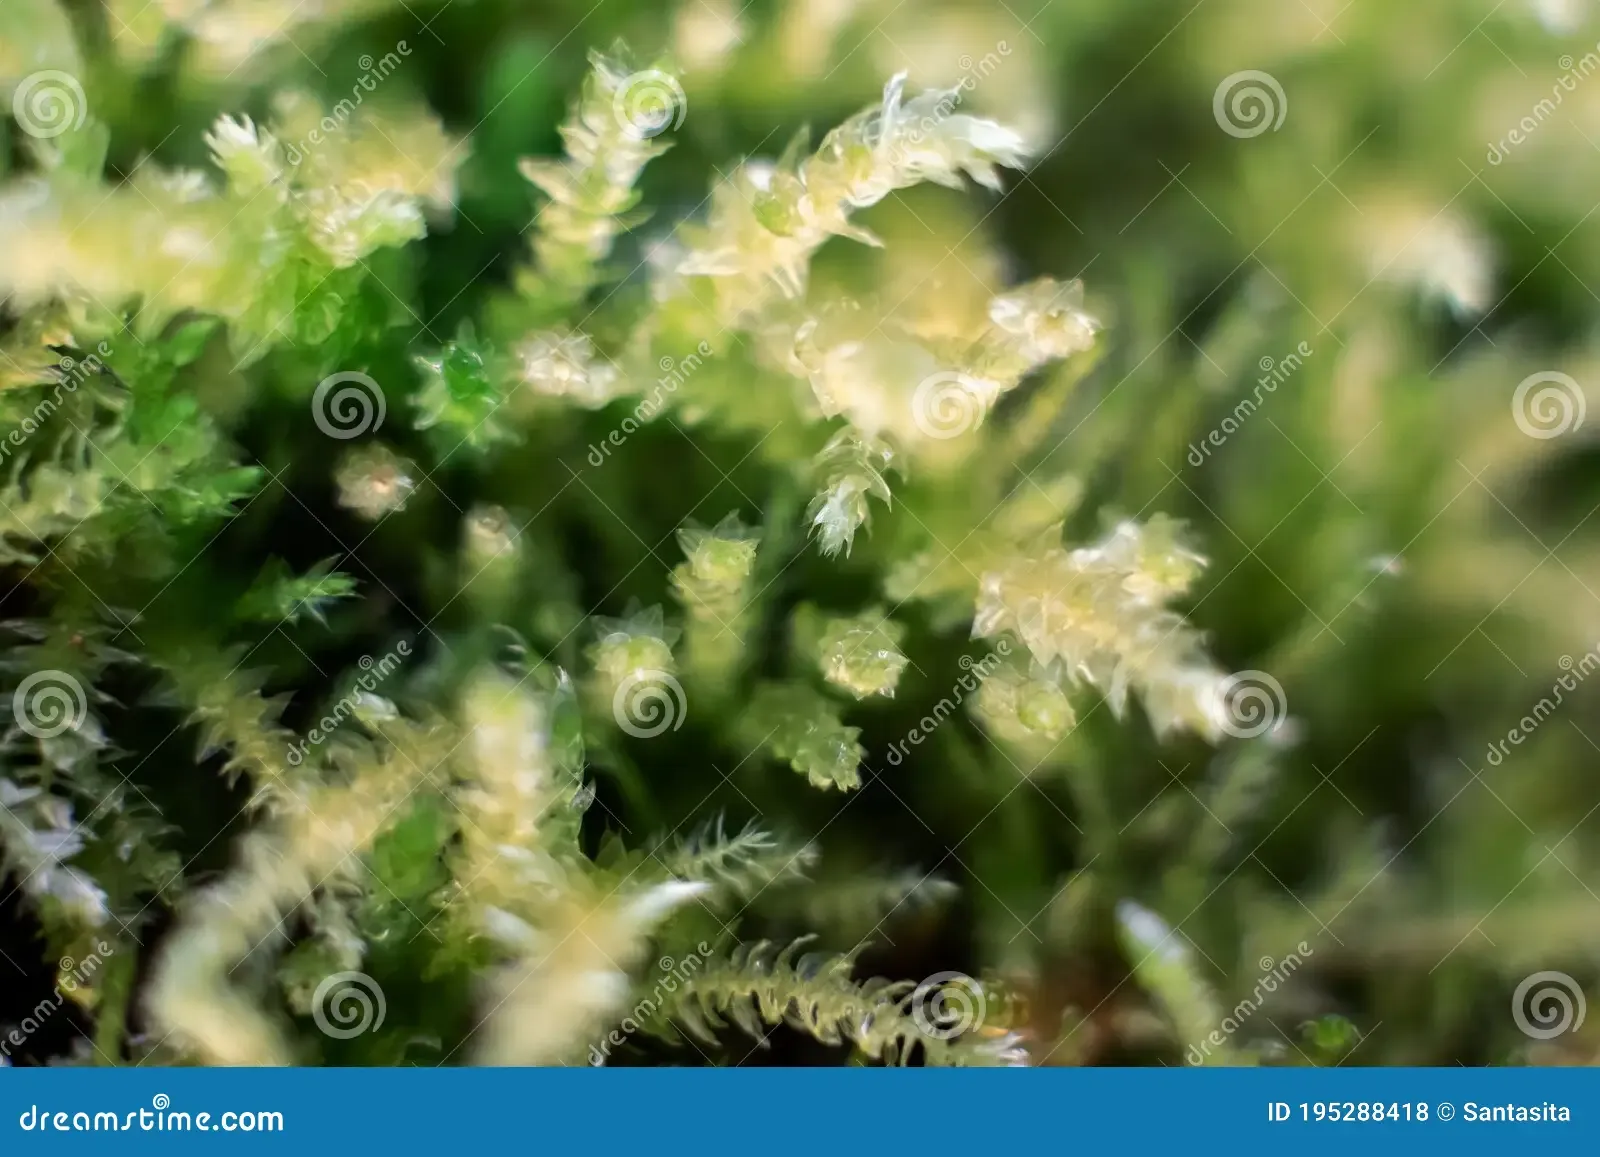 macro-bryum-moss-pohlia-nutans-dew-drops-forest-floor-over-dark-green-background-mossy-plants-mosses-195288418.jpg